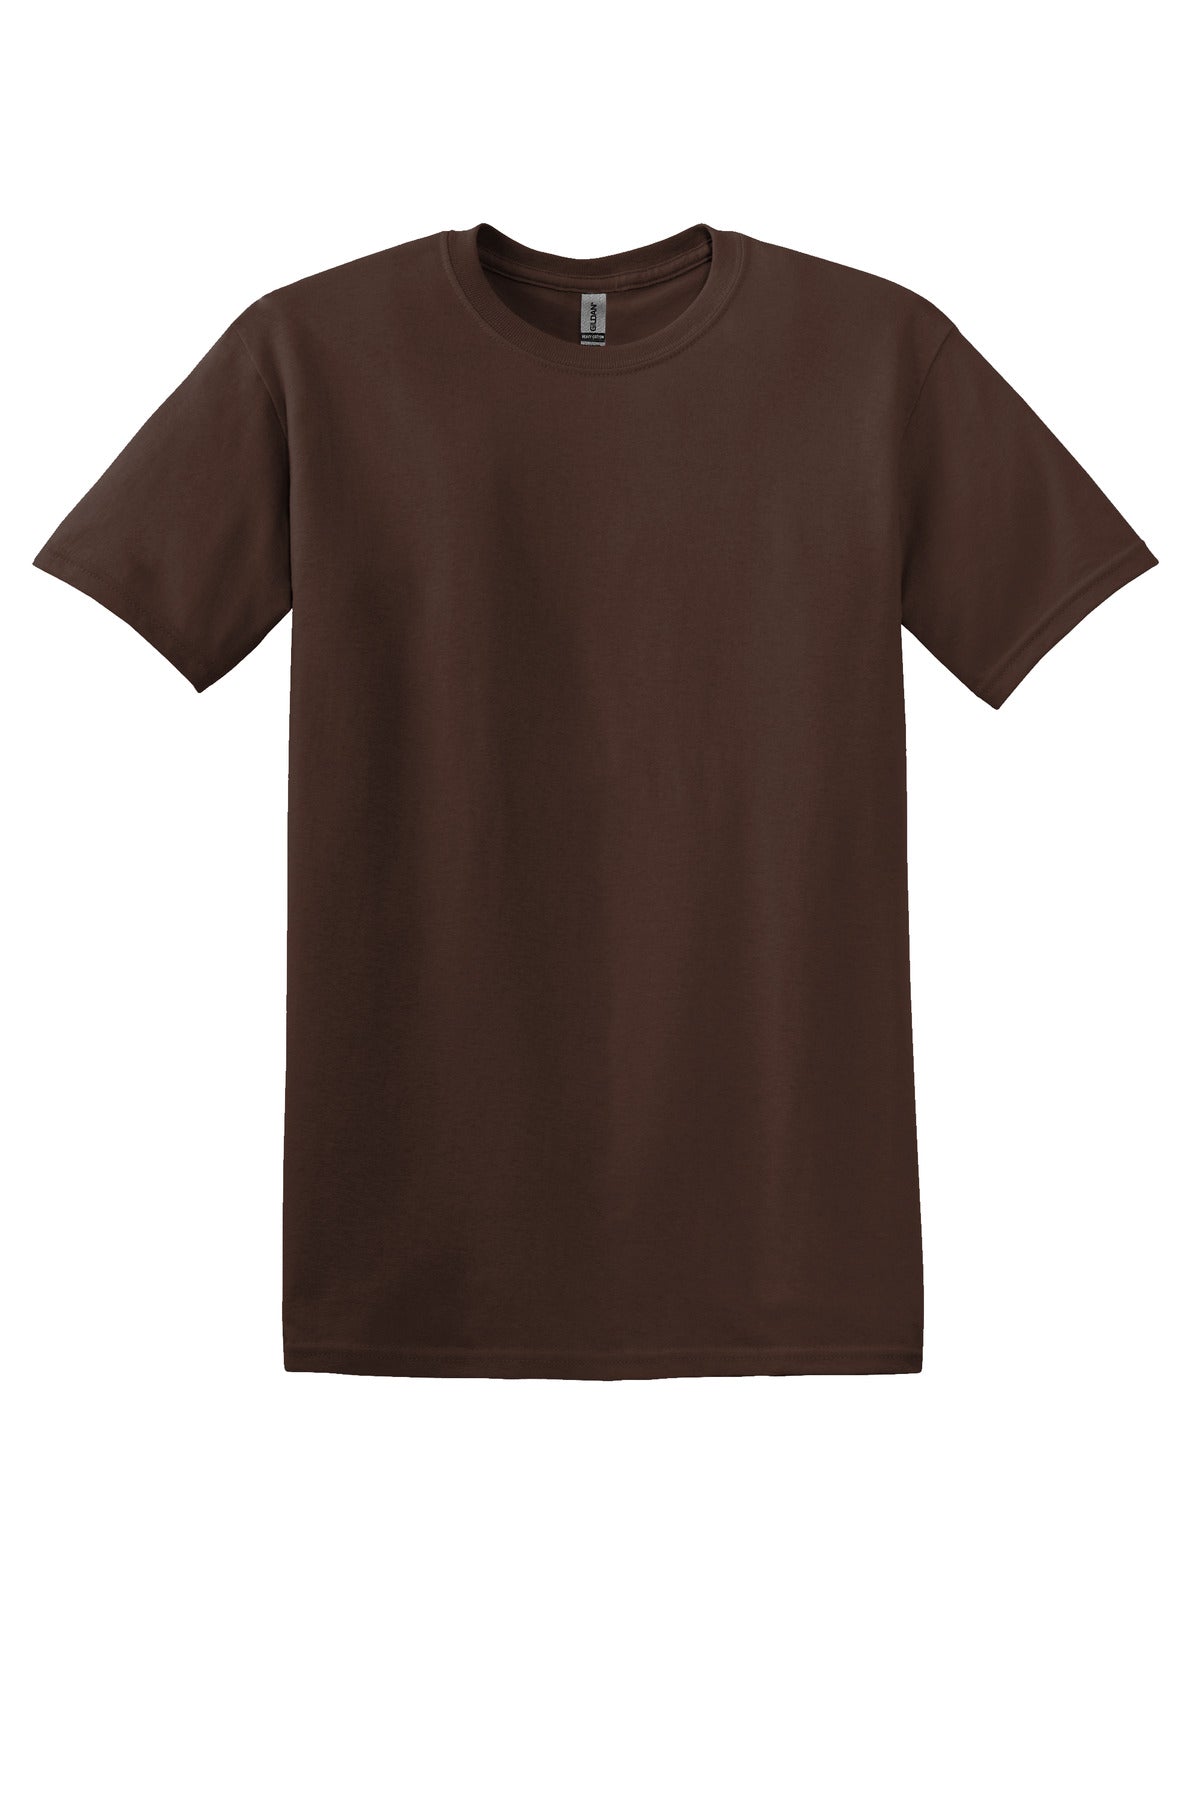 Gildan - Heavy Cotton 100% Cotton T-Shirt. 5000 - Dark Chocolate